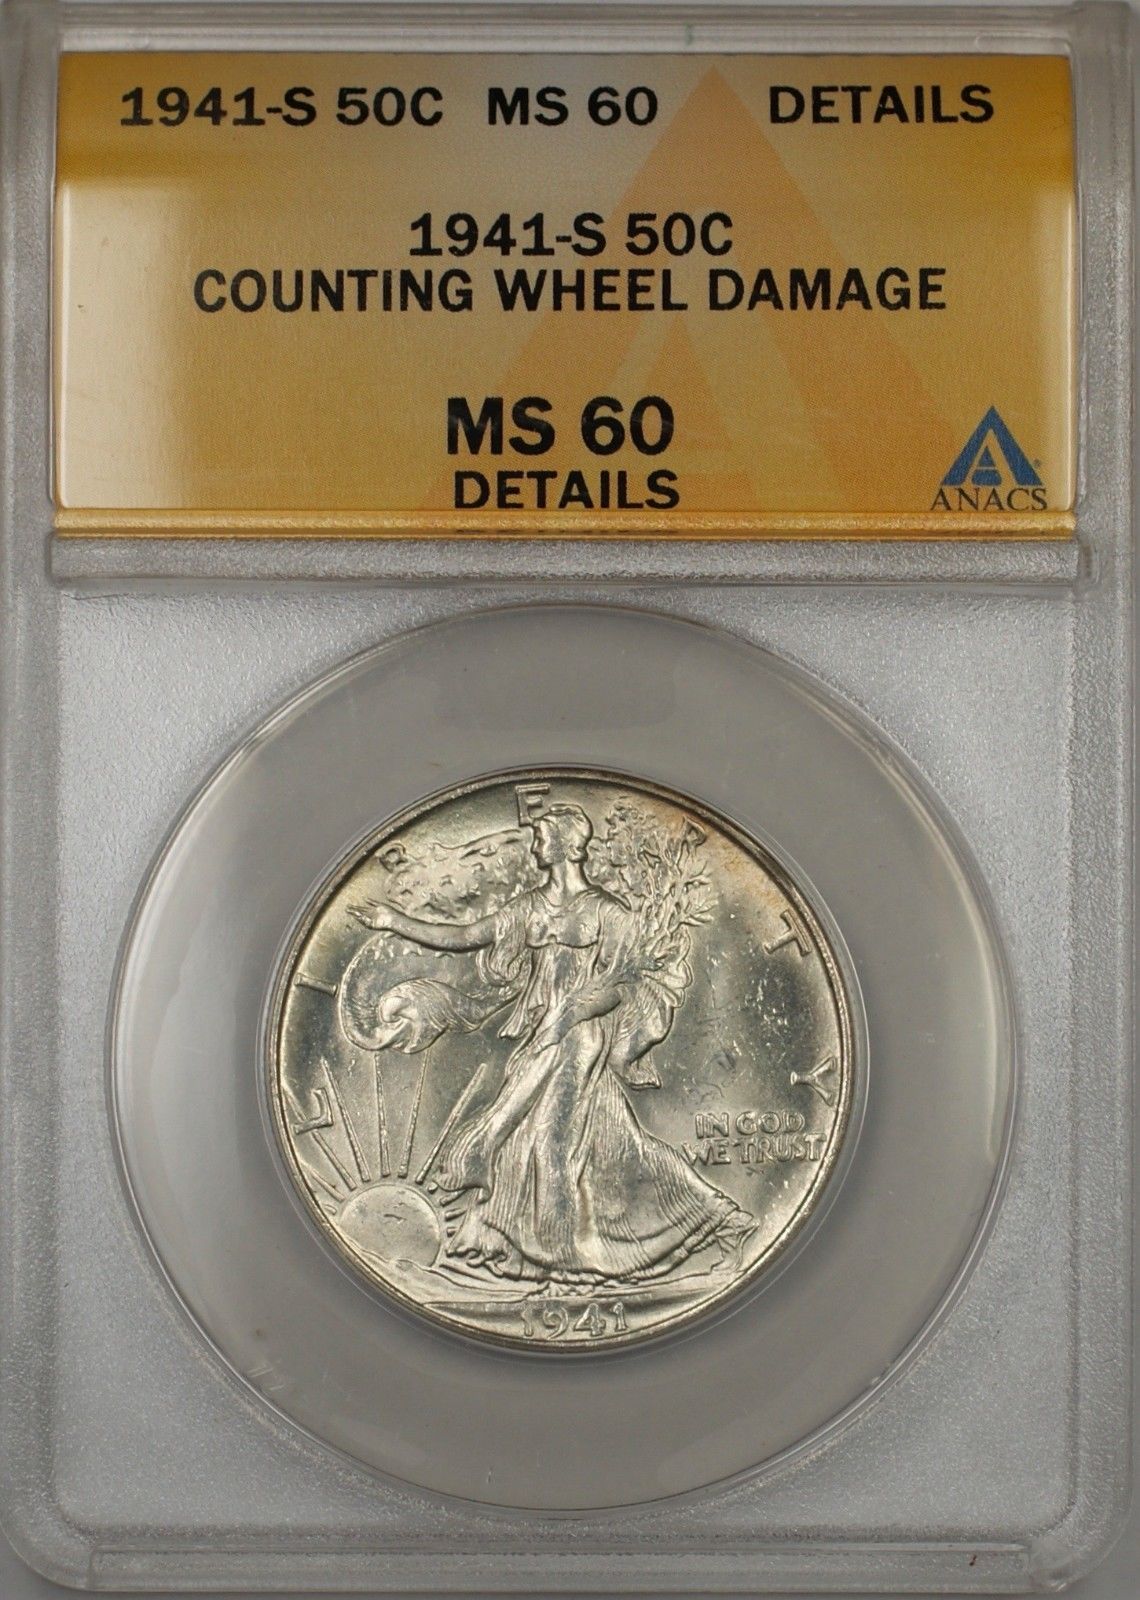 1941 S 50C Counting wheel damage.jpg